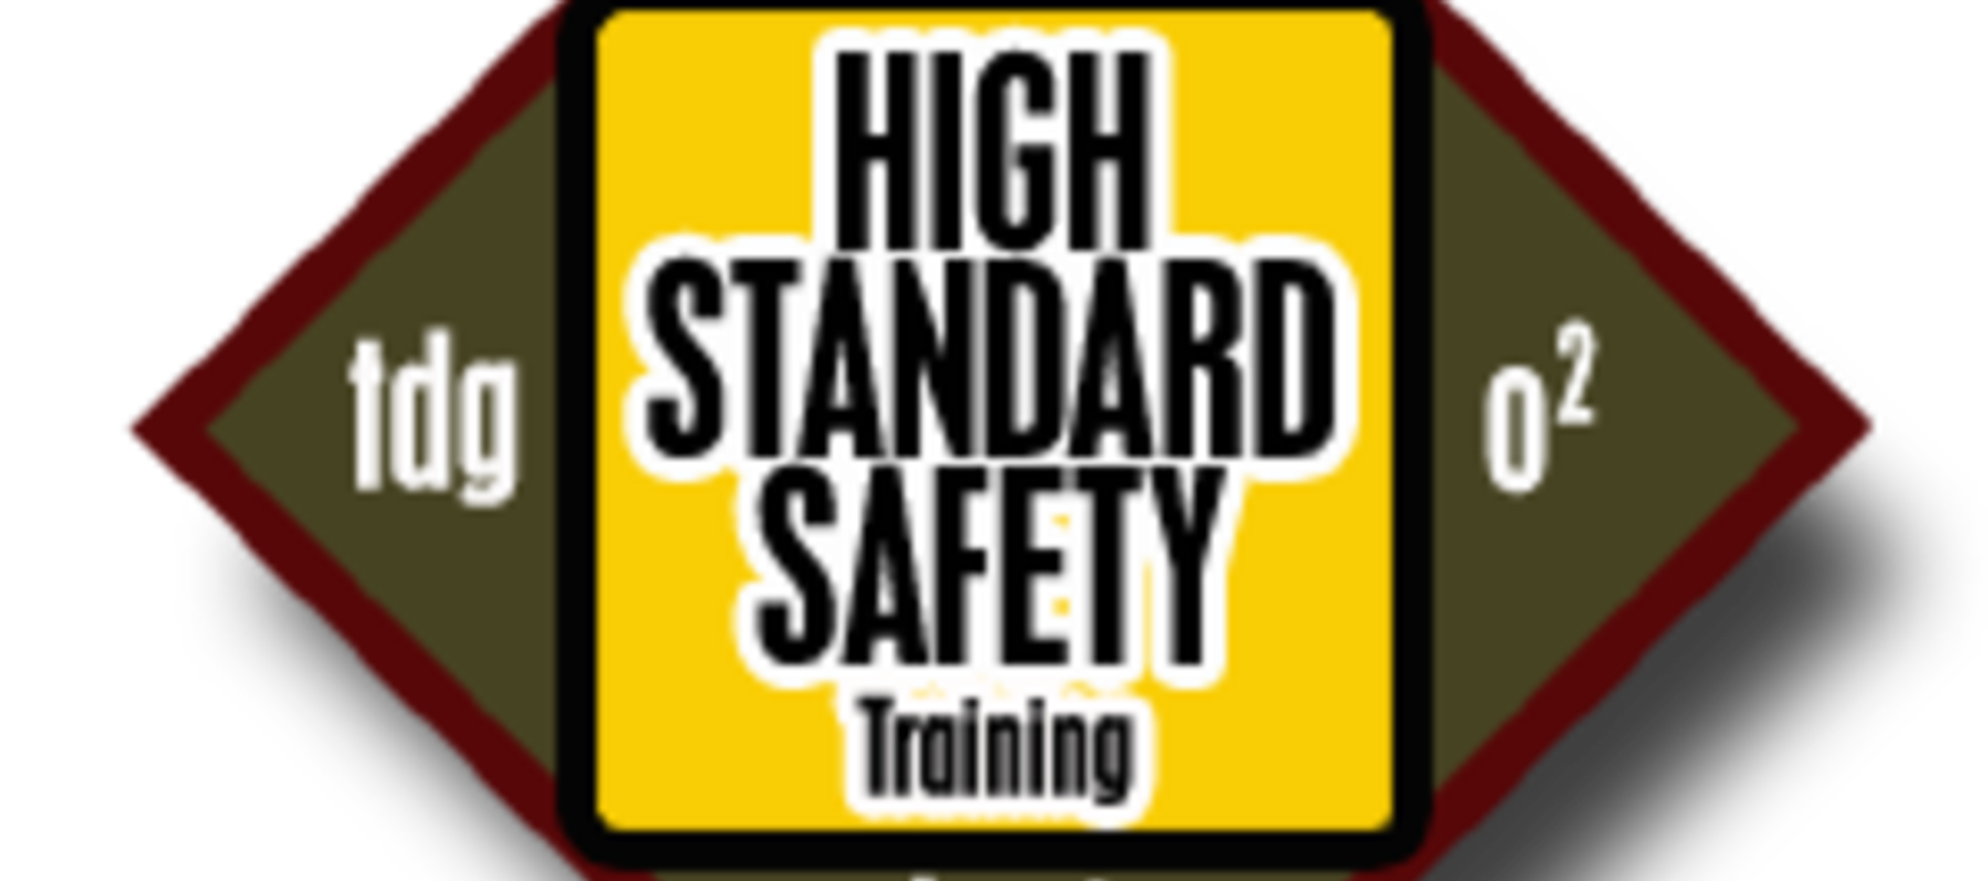 High Standard Safety Training